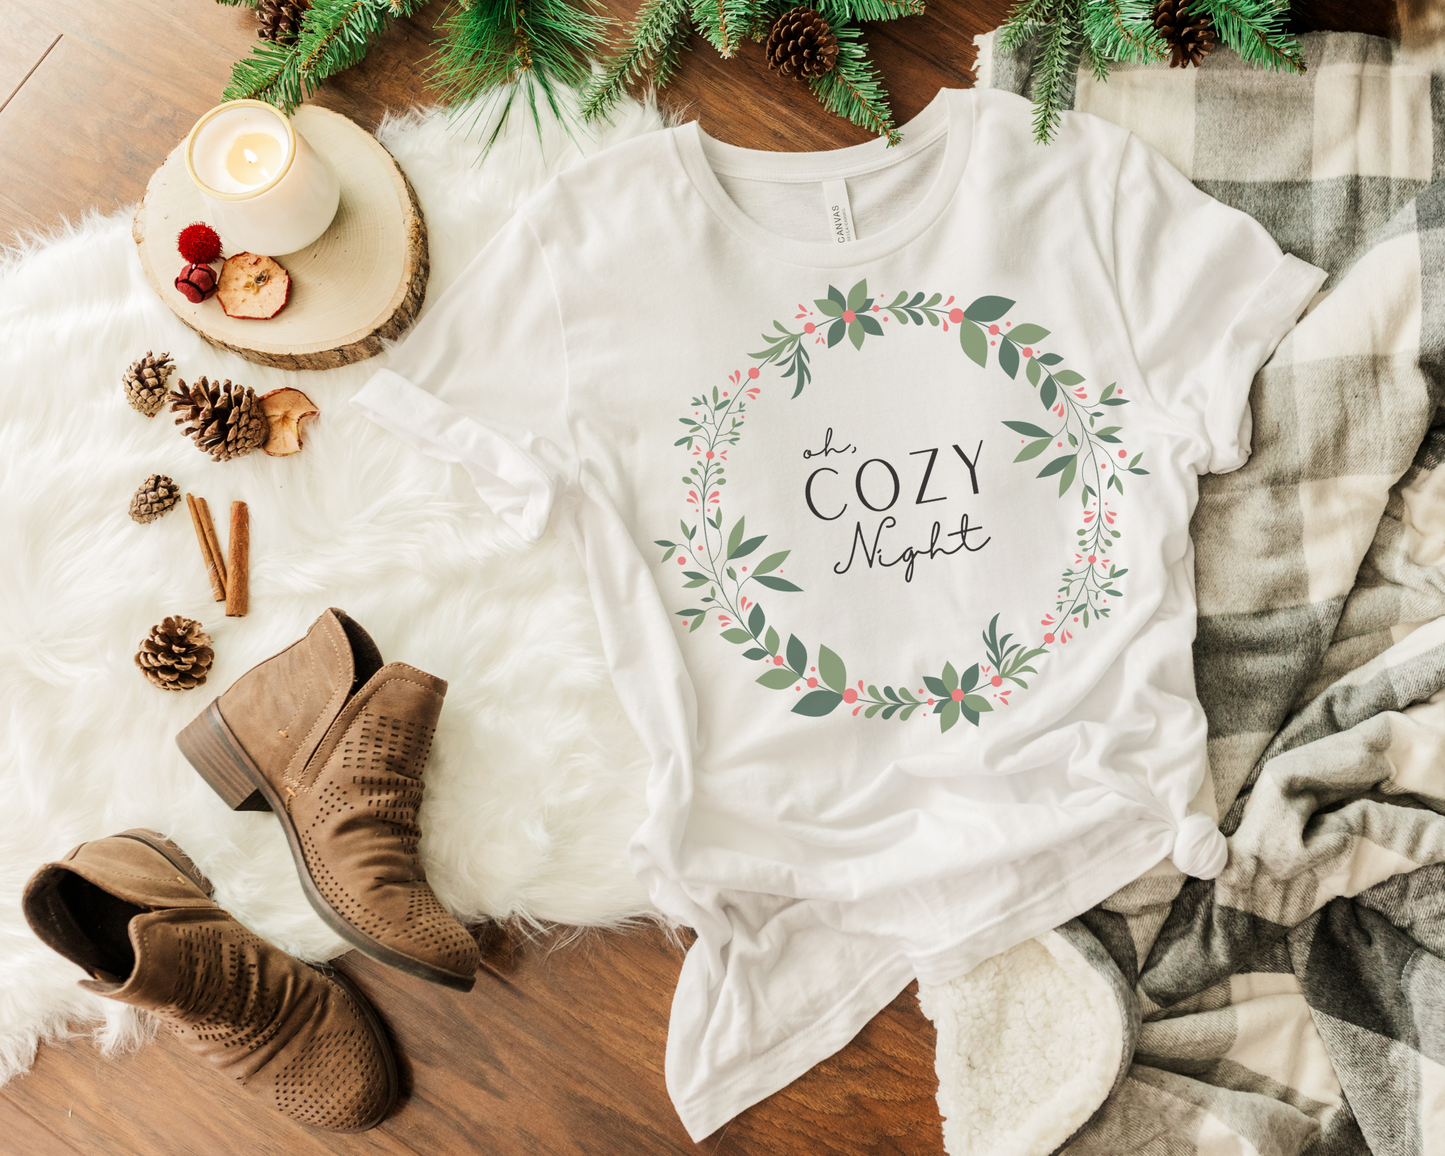 Oh, Cozy Night Christmas Shirt, Wreath Tee